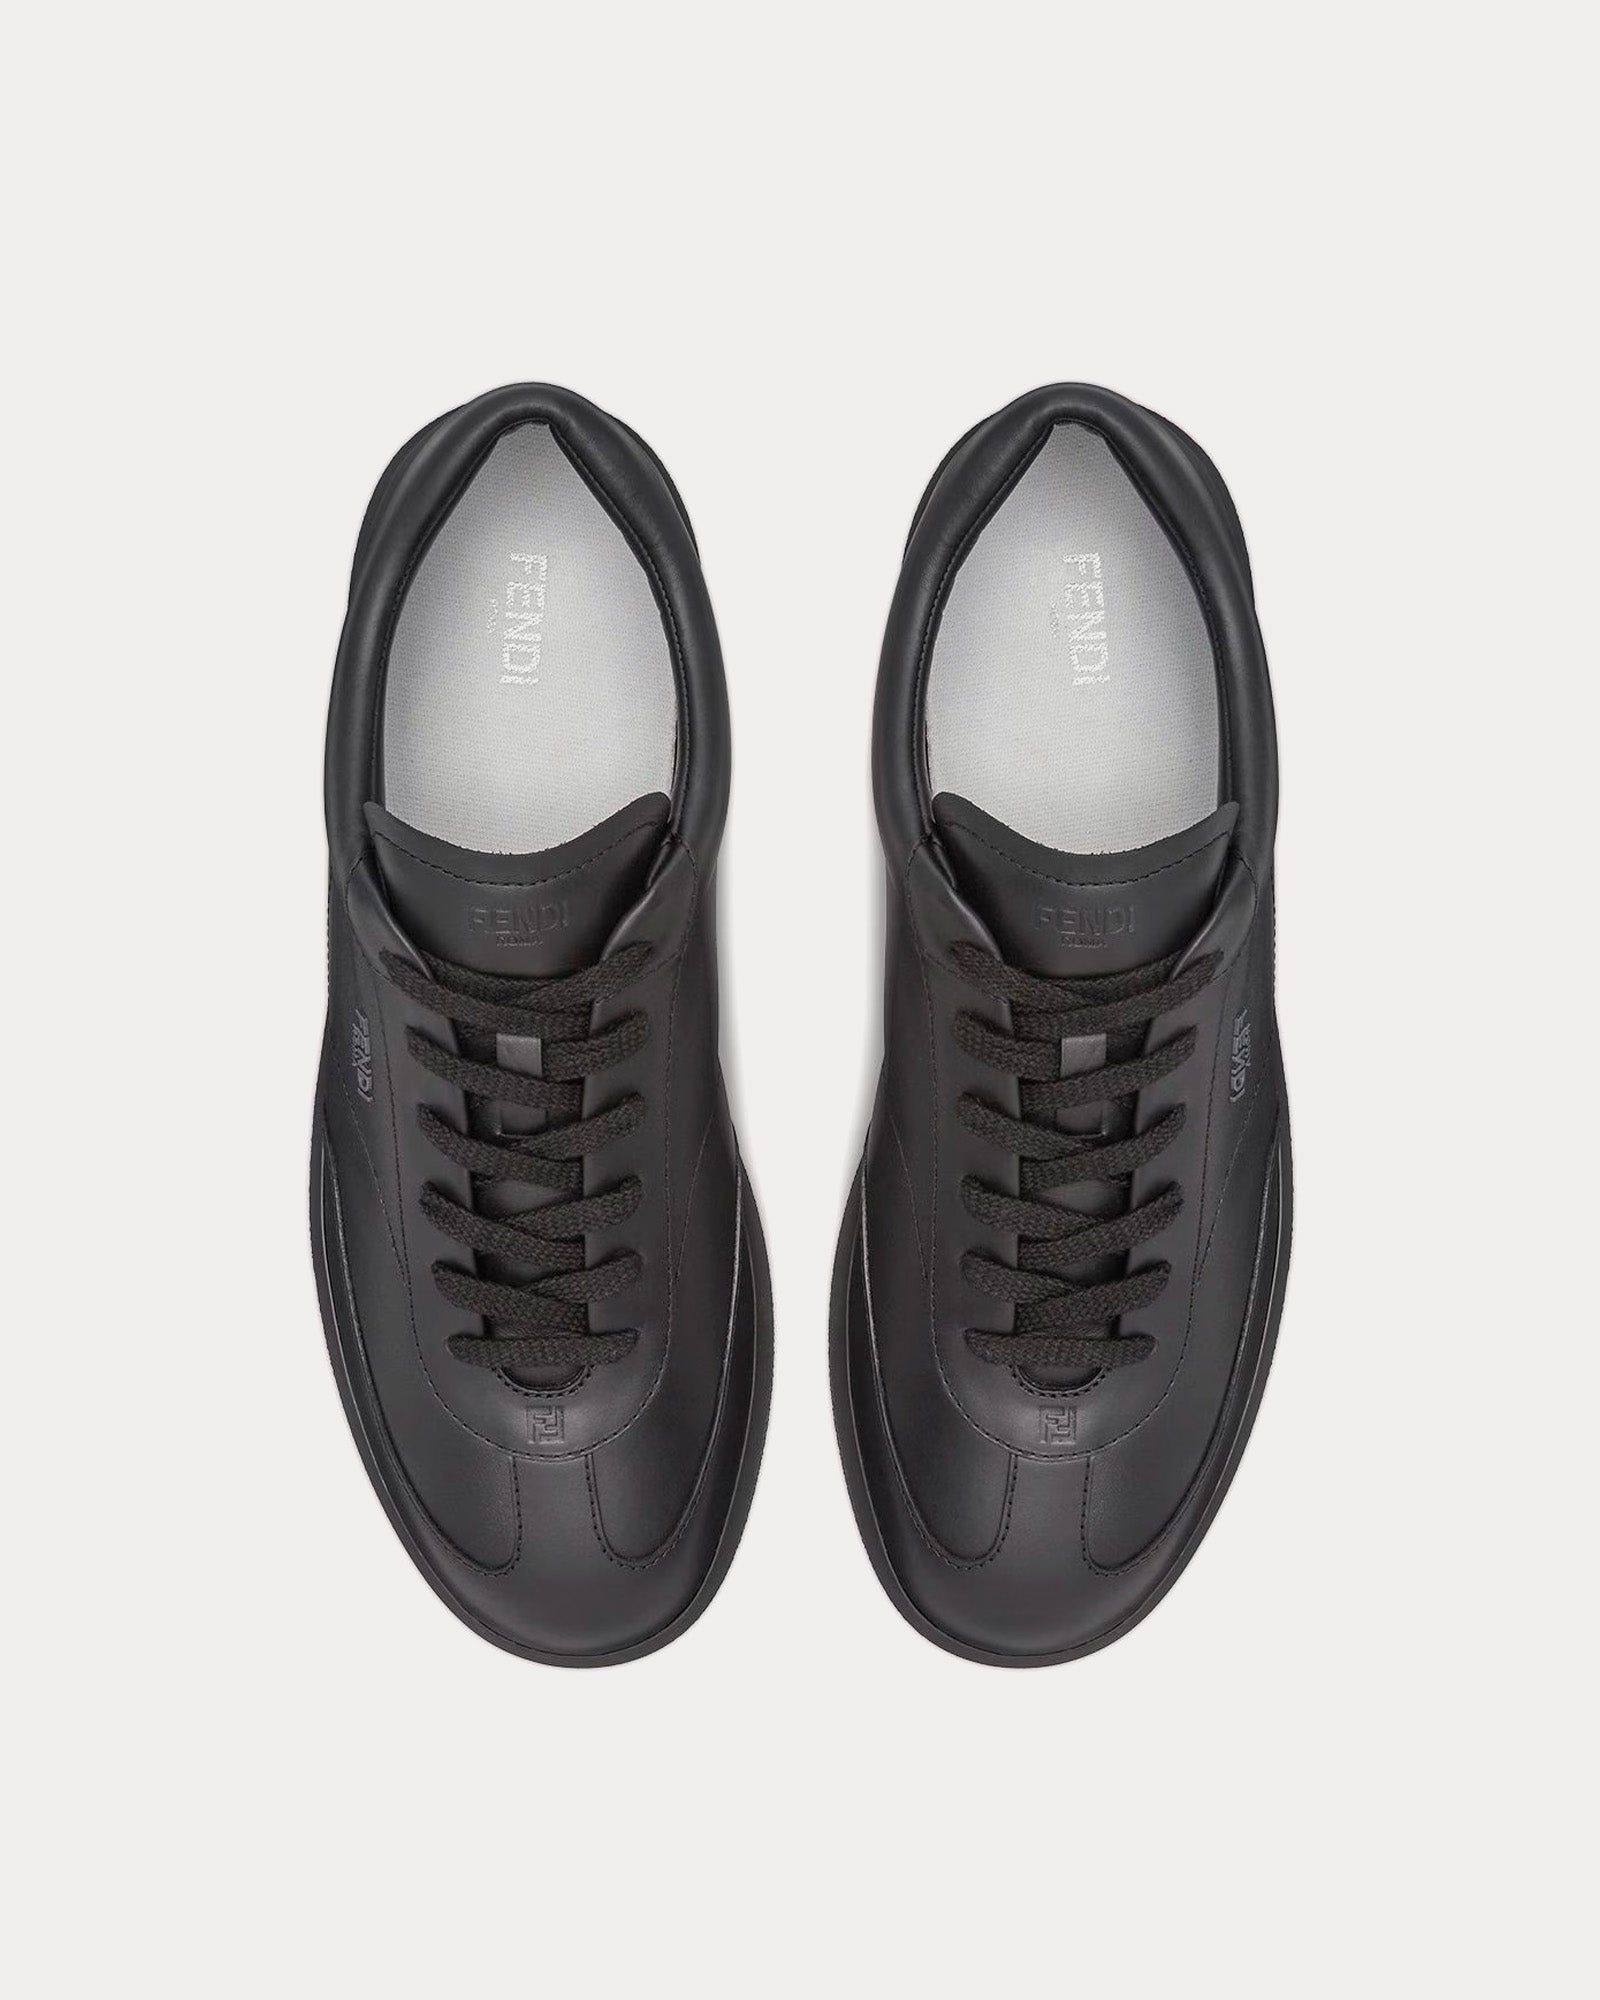 Fendi by Stefano Pilati - Slim Leather Black Low Top Sneakers